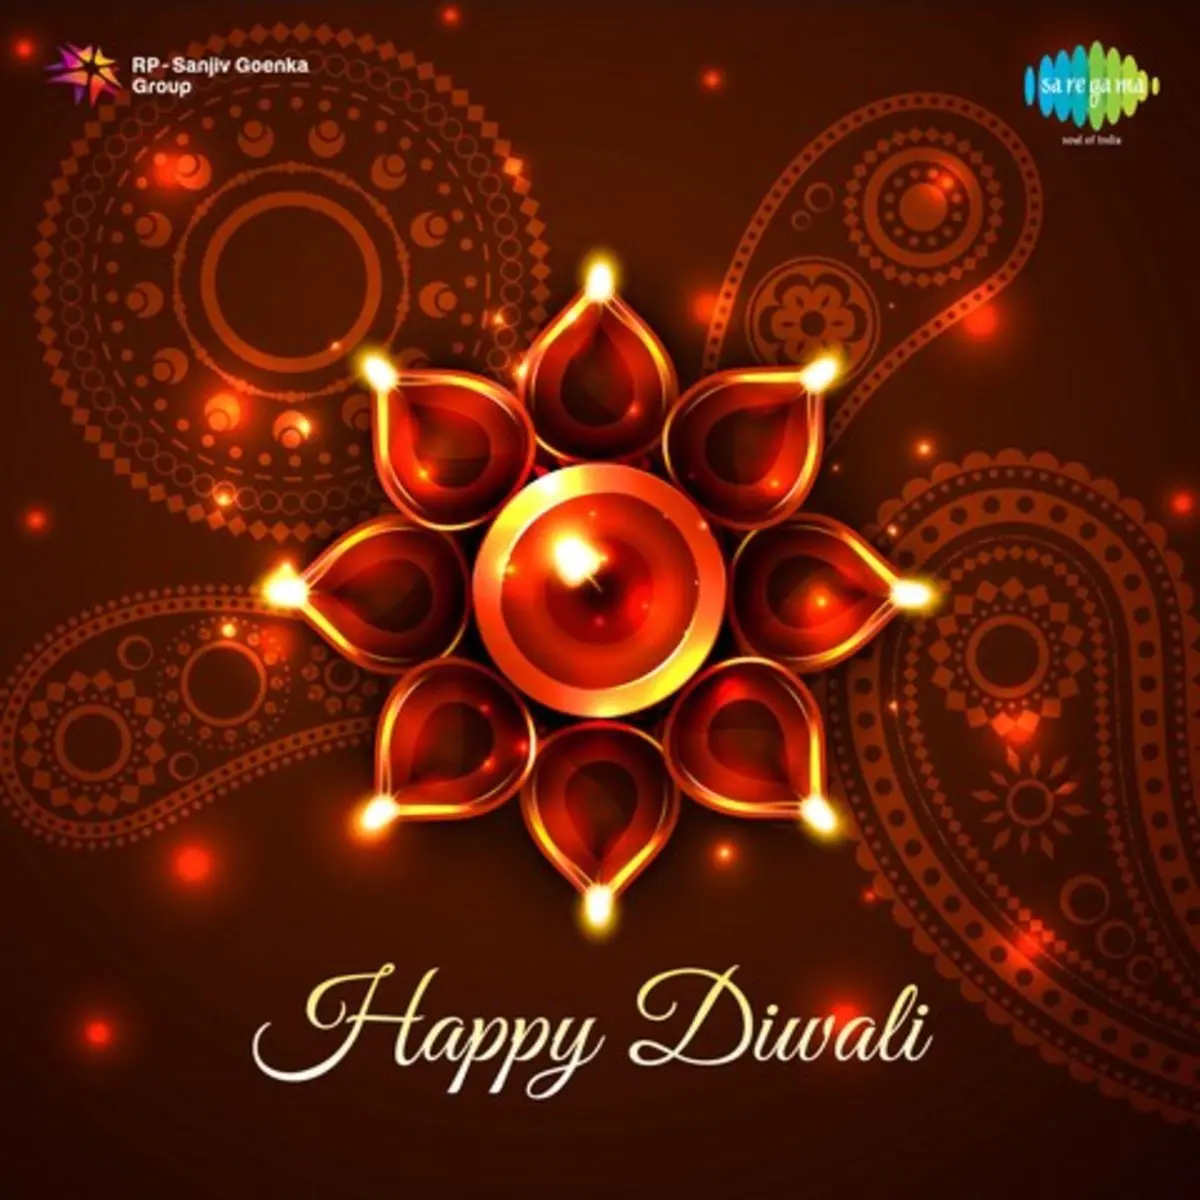 Happy Diwali Songs Download Happy Diwali Mp3 Songs Online Free On